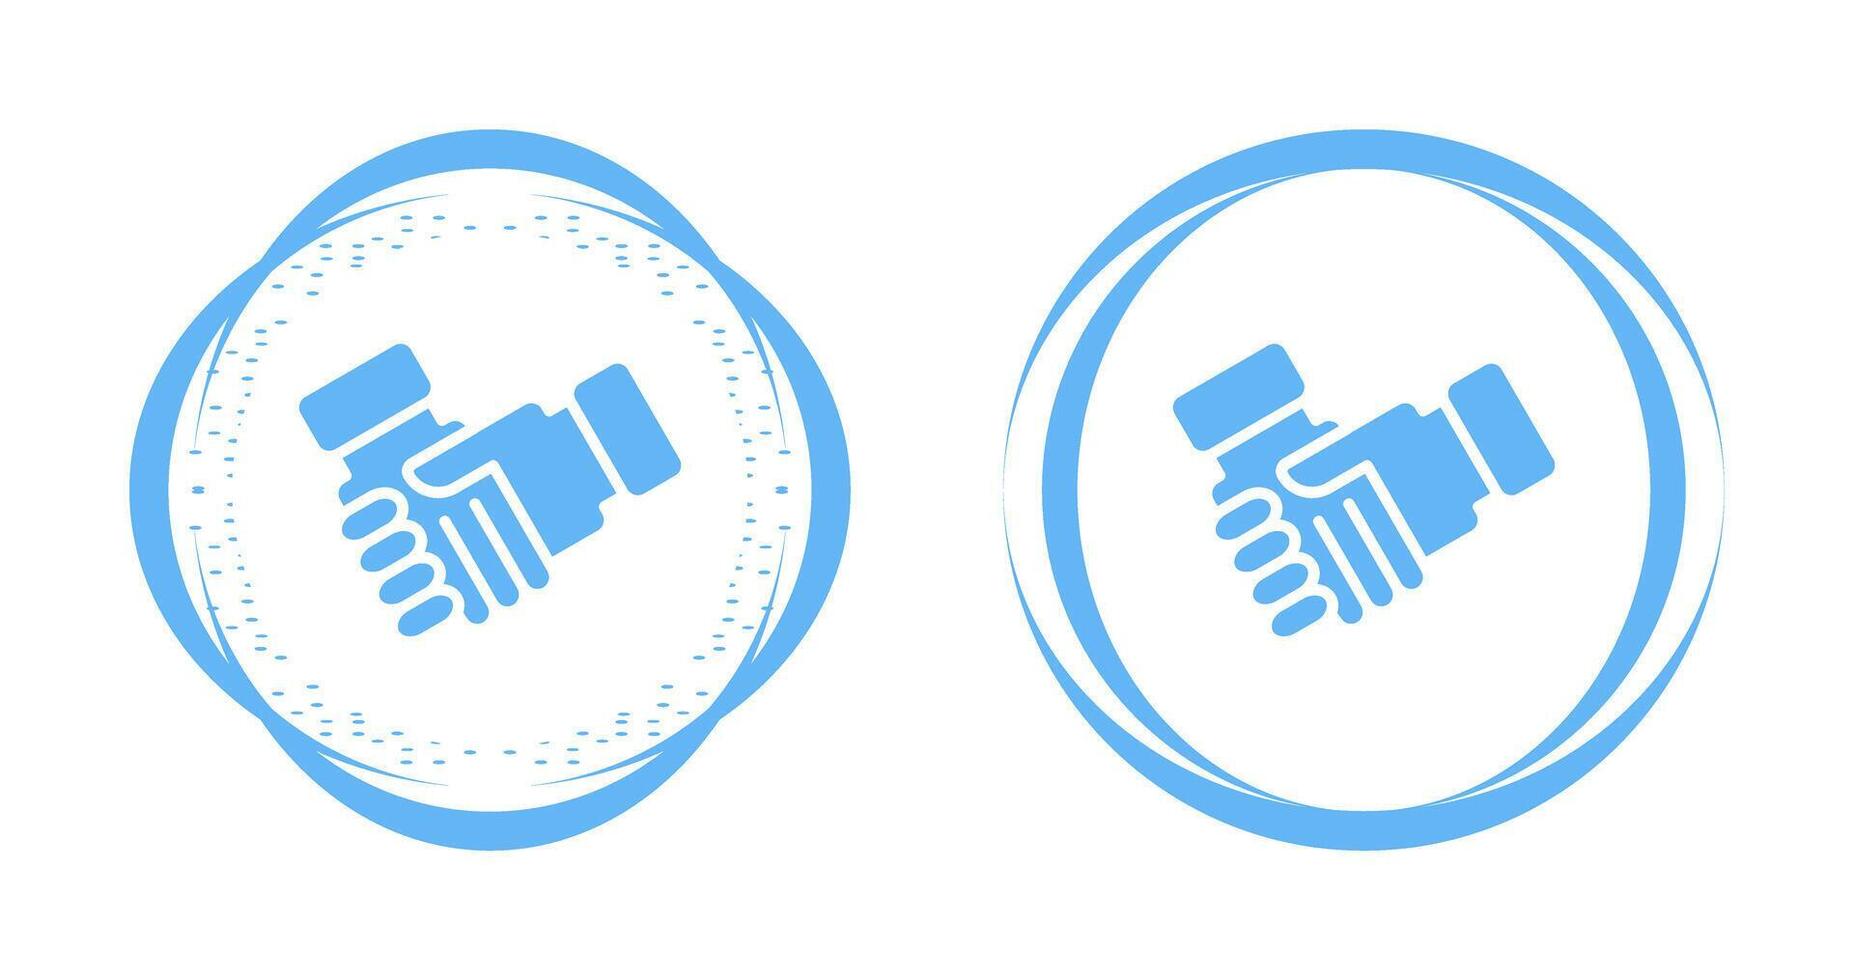 Handshake Vector Icon